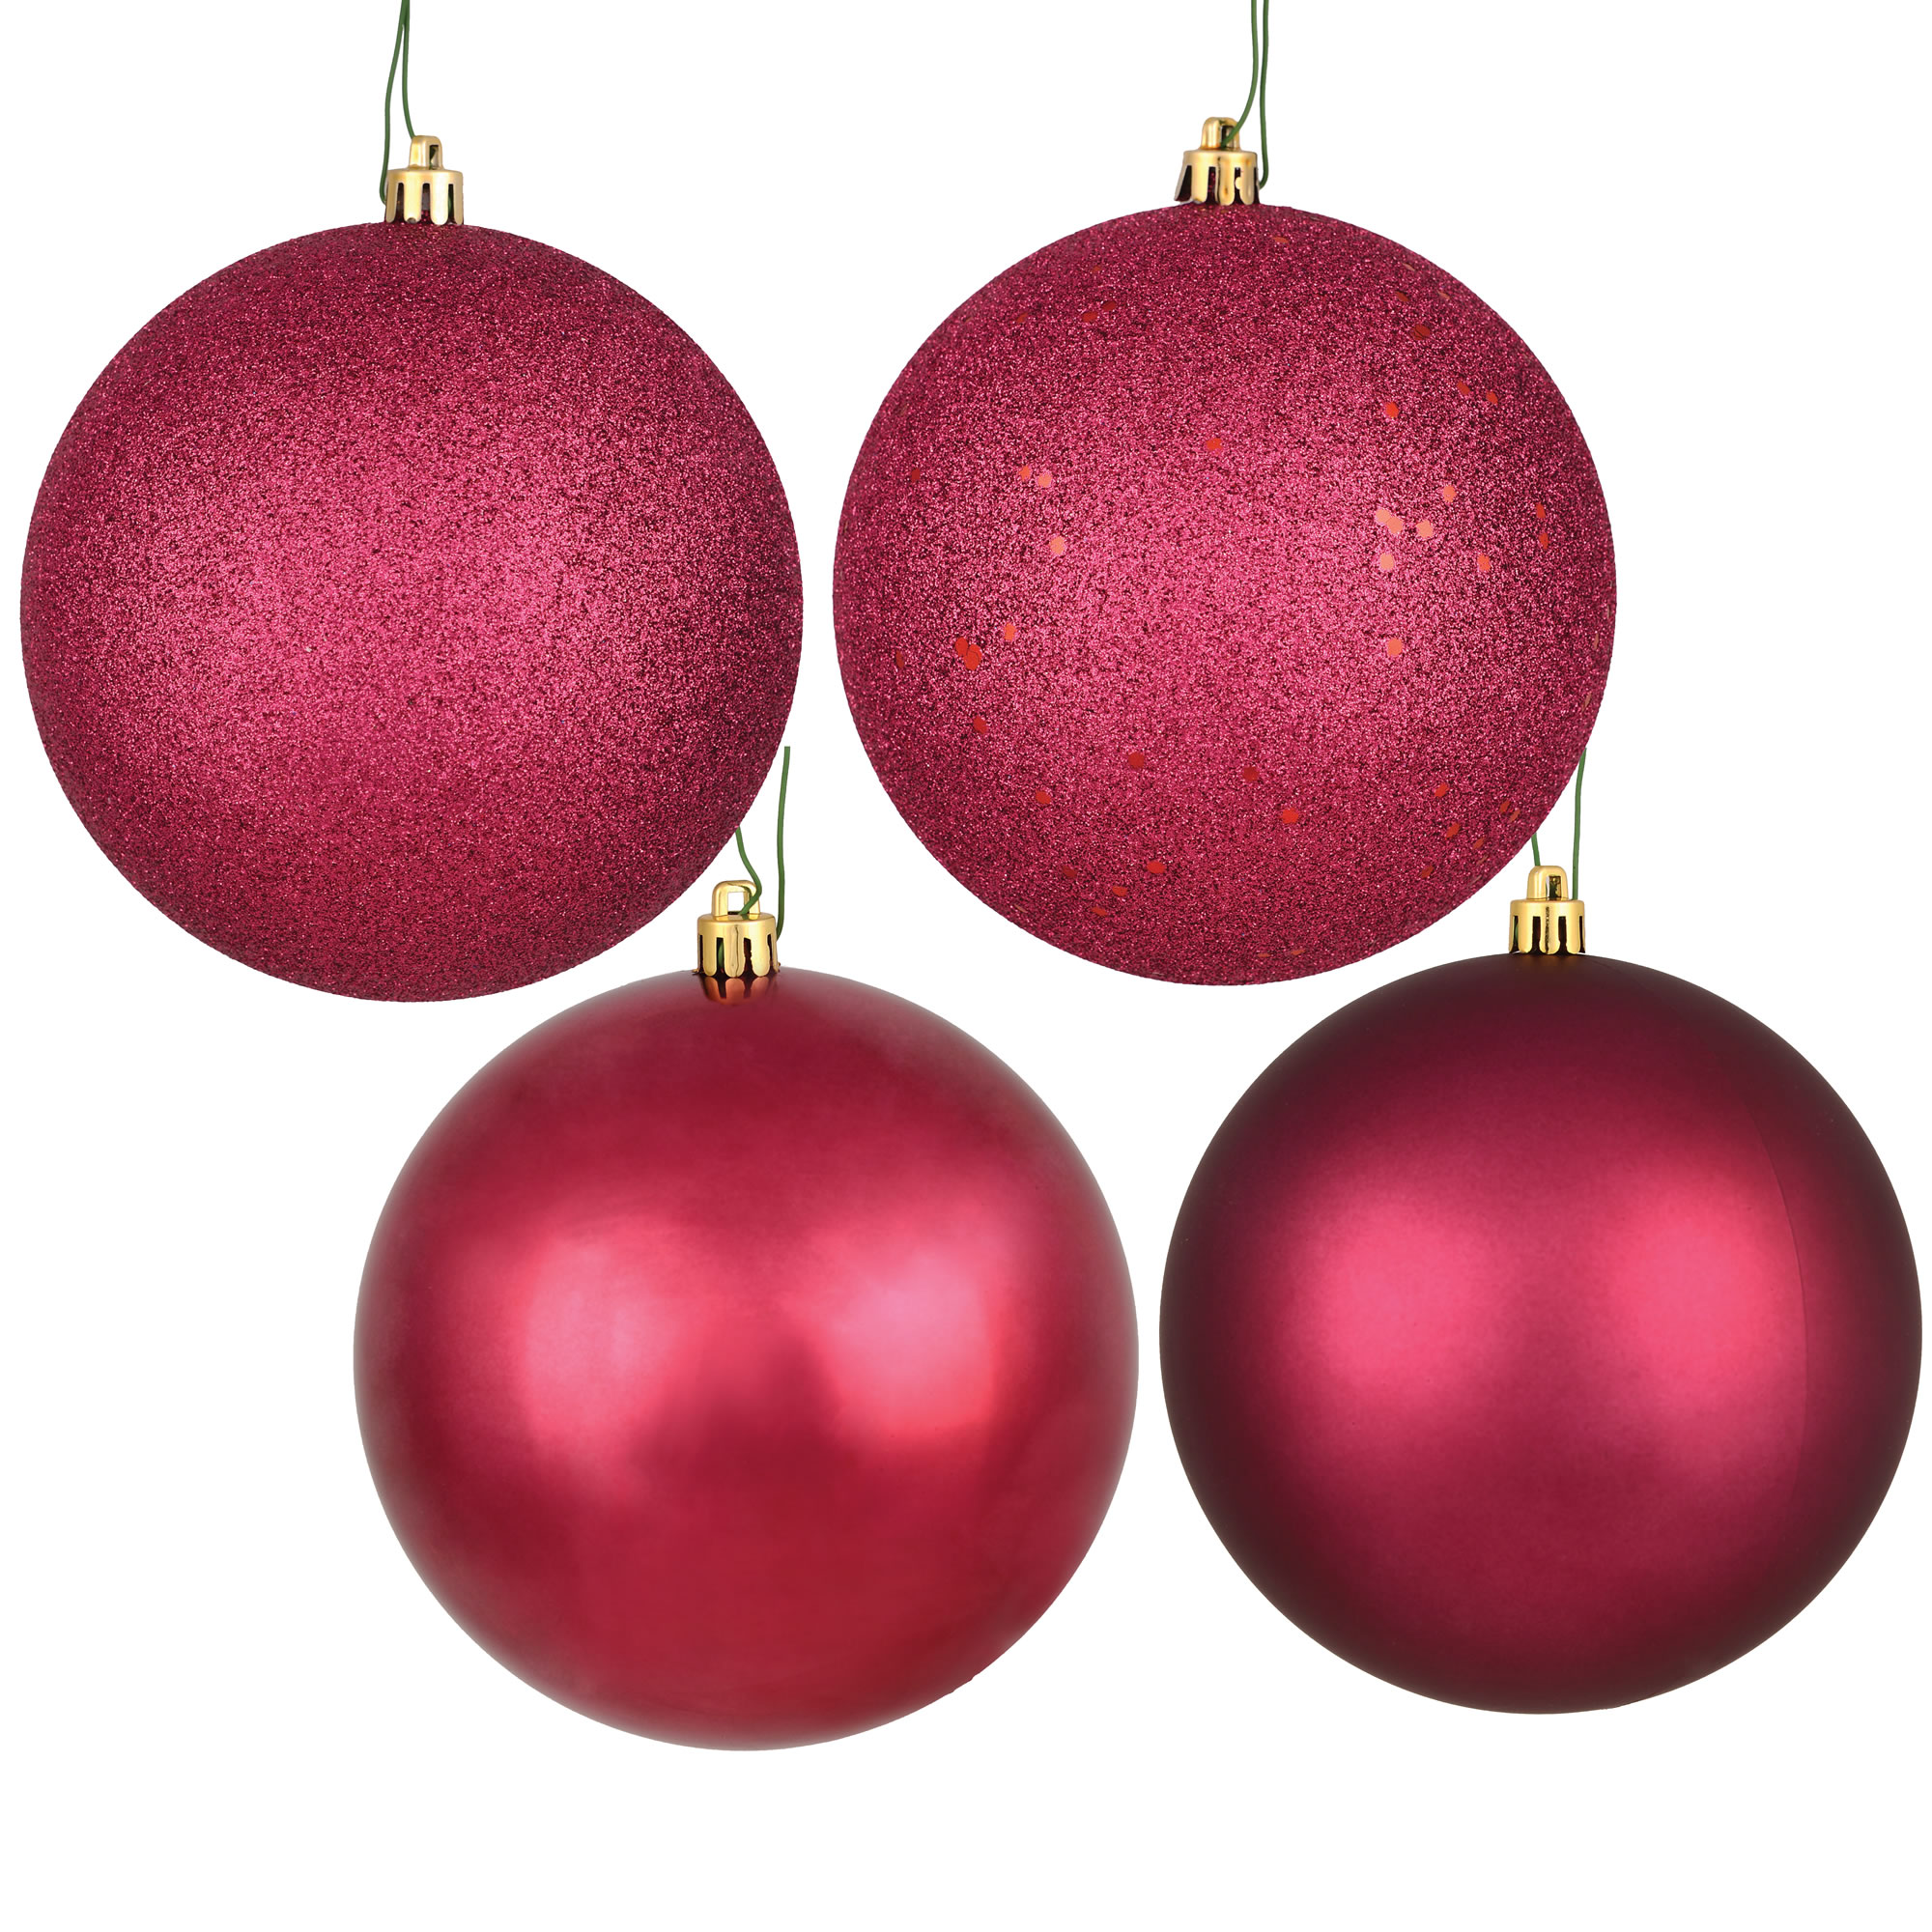 Vickerman 10" Berry Red 4-Finish Ball Ornament Assortment, 4 per Bag - image 1 of 3